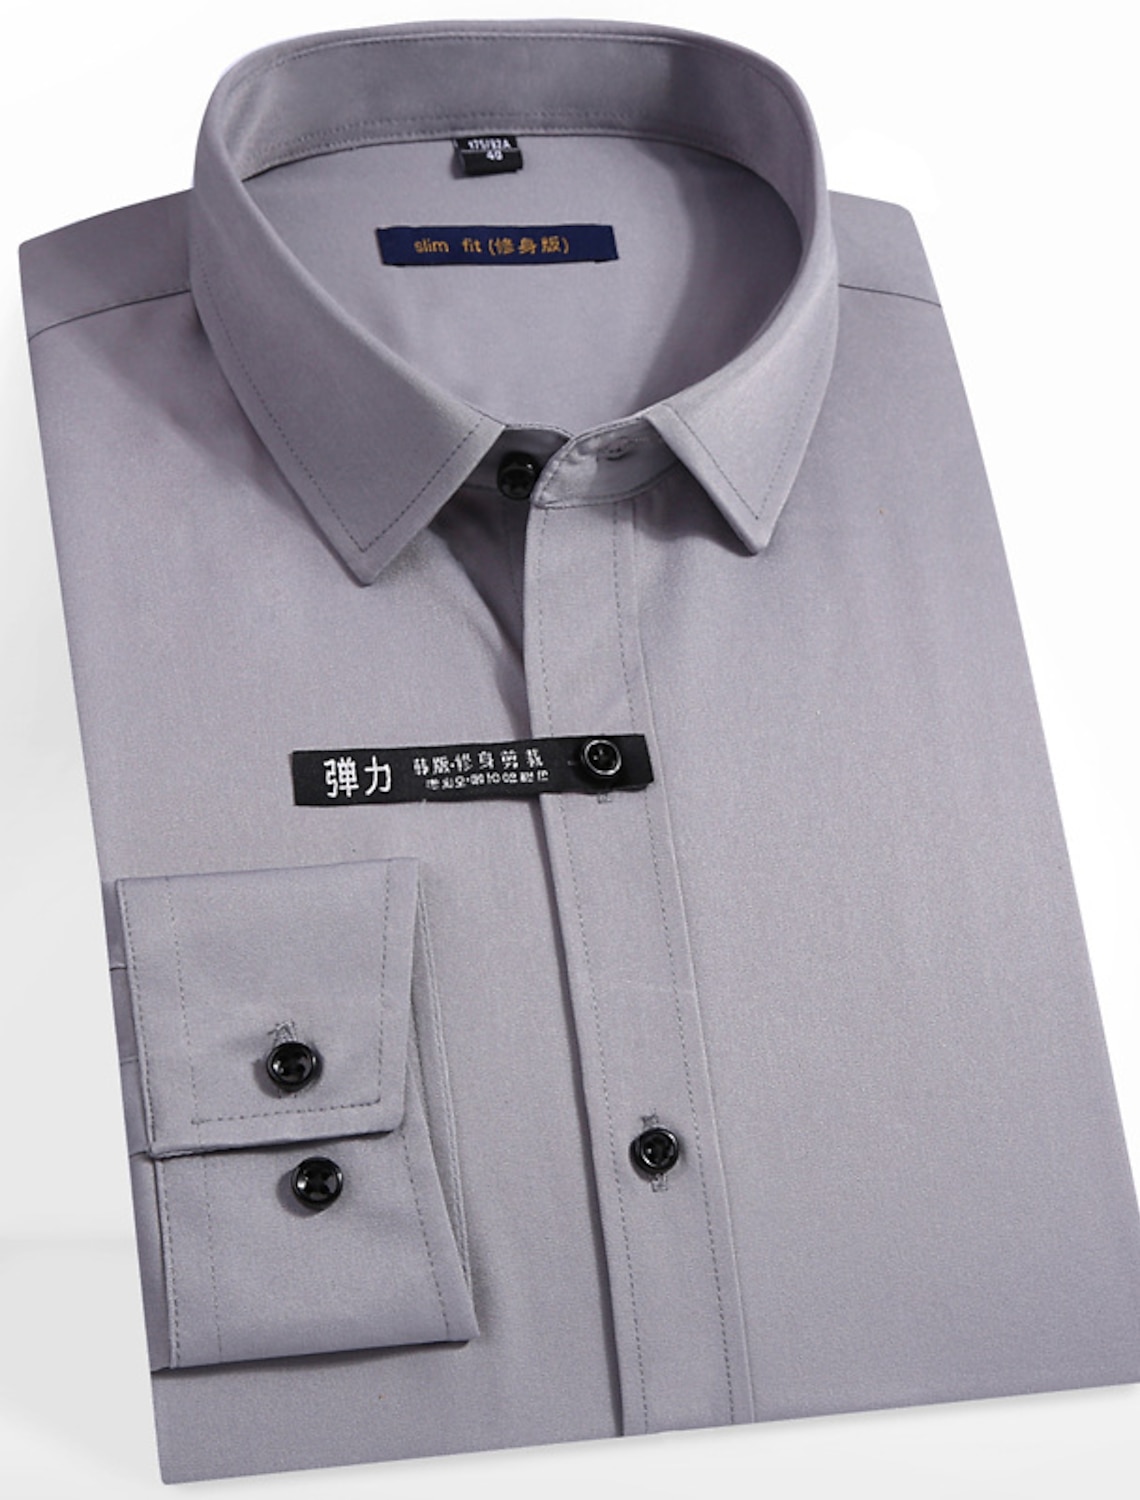 Keaac Mens Top Dress Shirts Long Sleeve Casual Button Down Collar Shirt